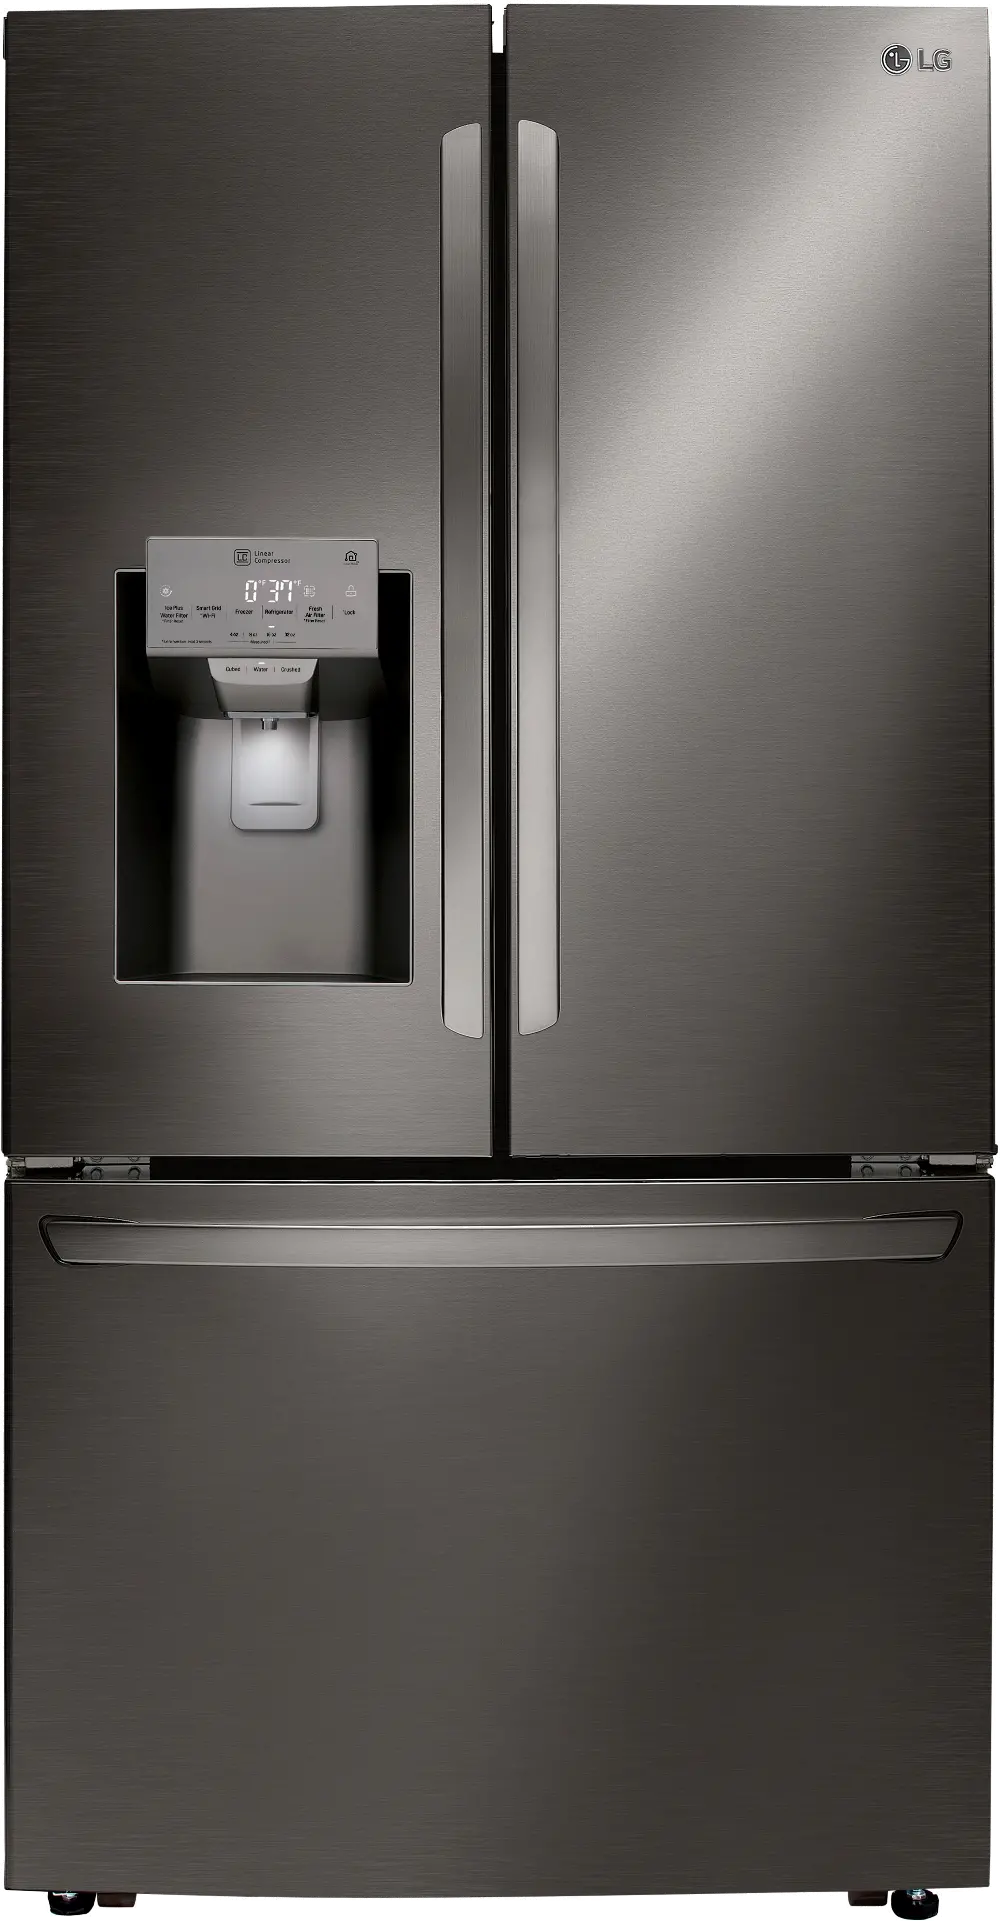 LRFXC2406D LG Counter Depth French Door Smart Refrigerator - 23.5 cu. ft., 36 Inch Black Stainless Steel-1